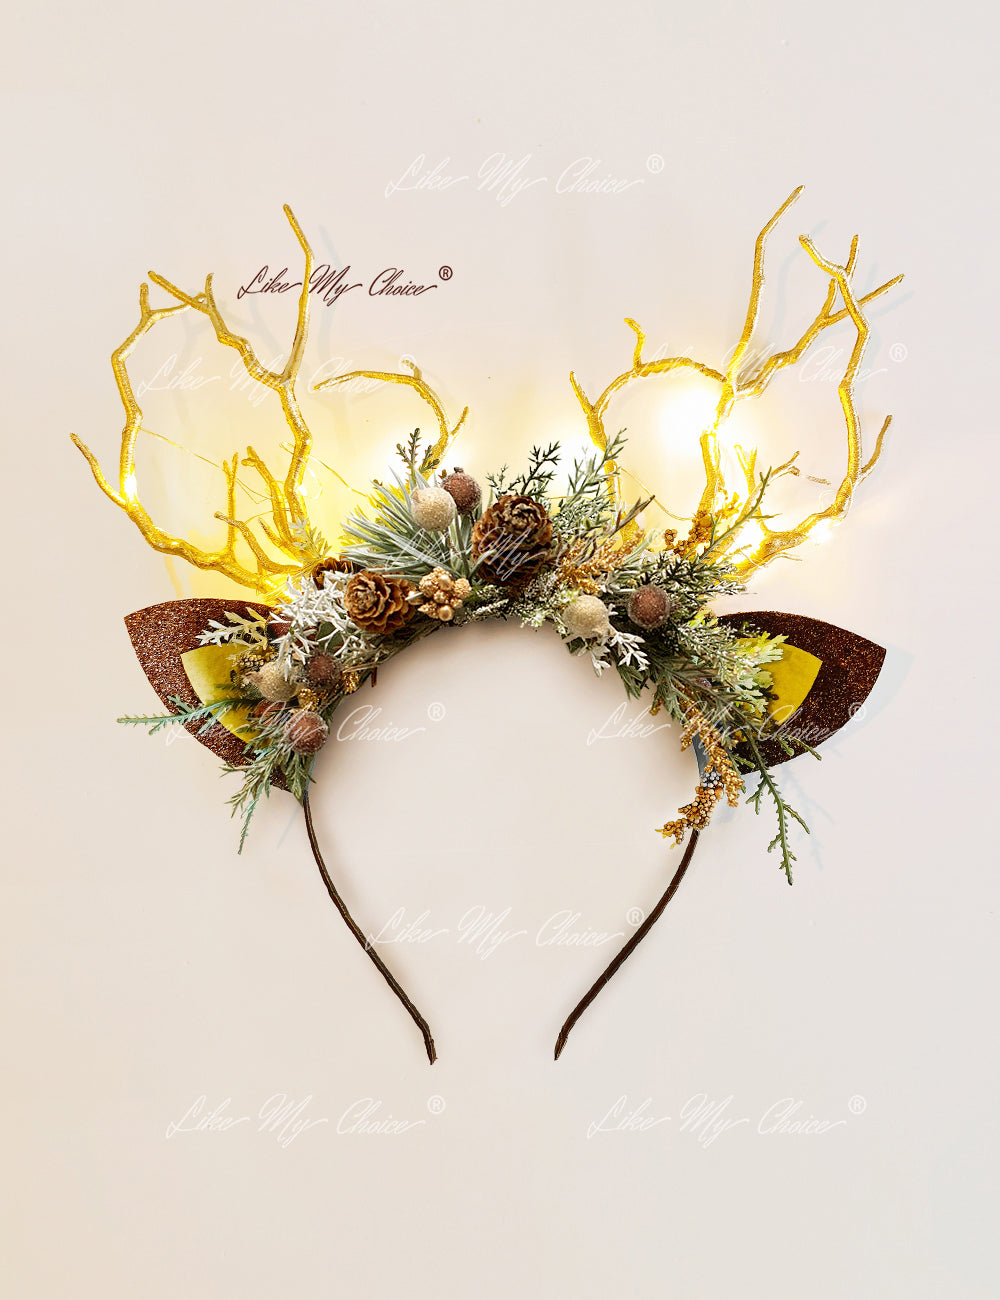 LikeMyChoice® Reindeer Headband- Pine Cone